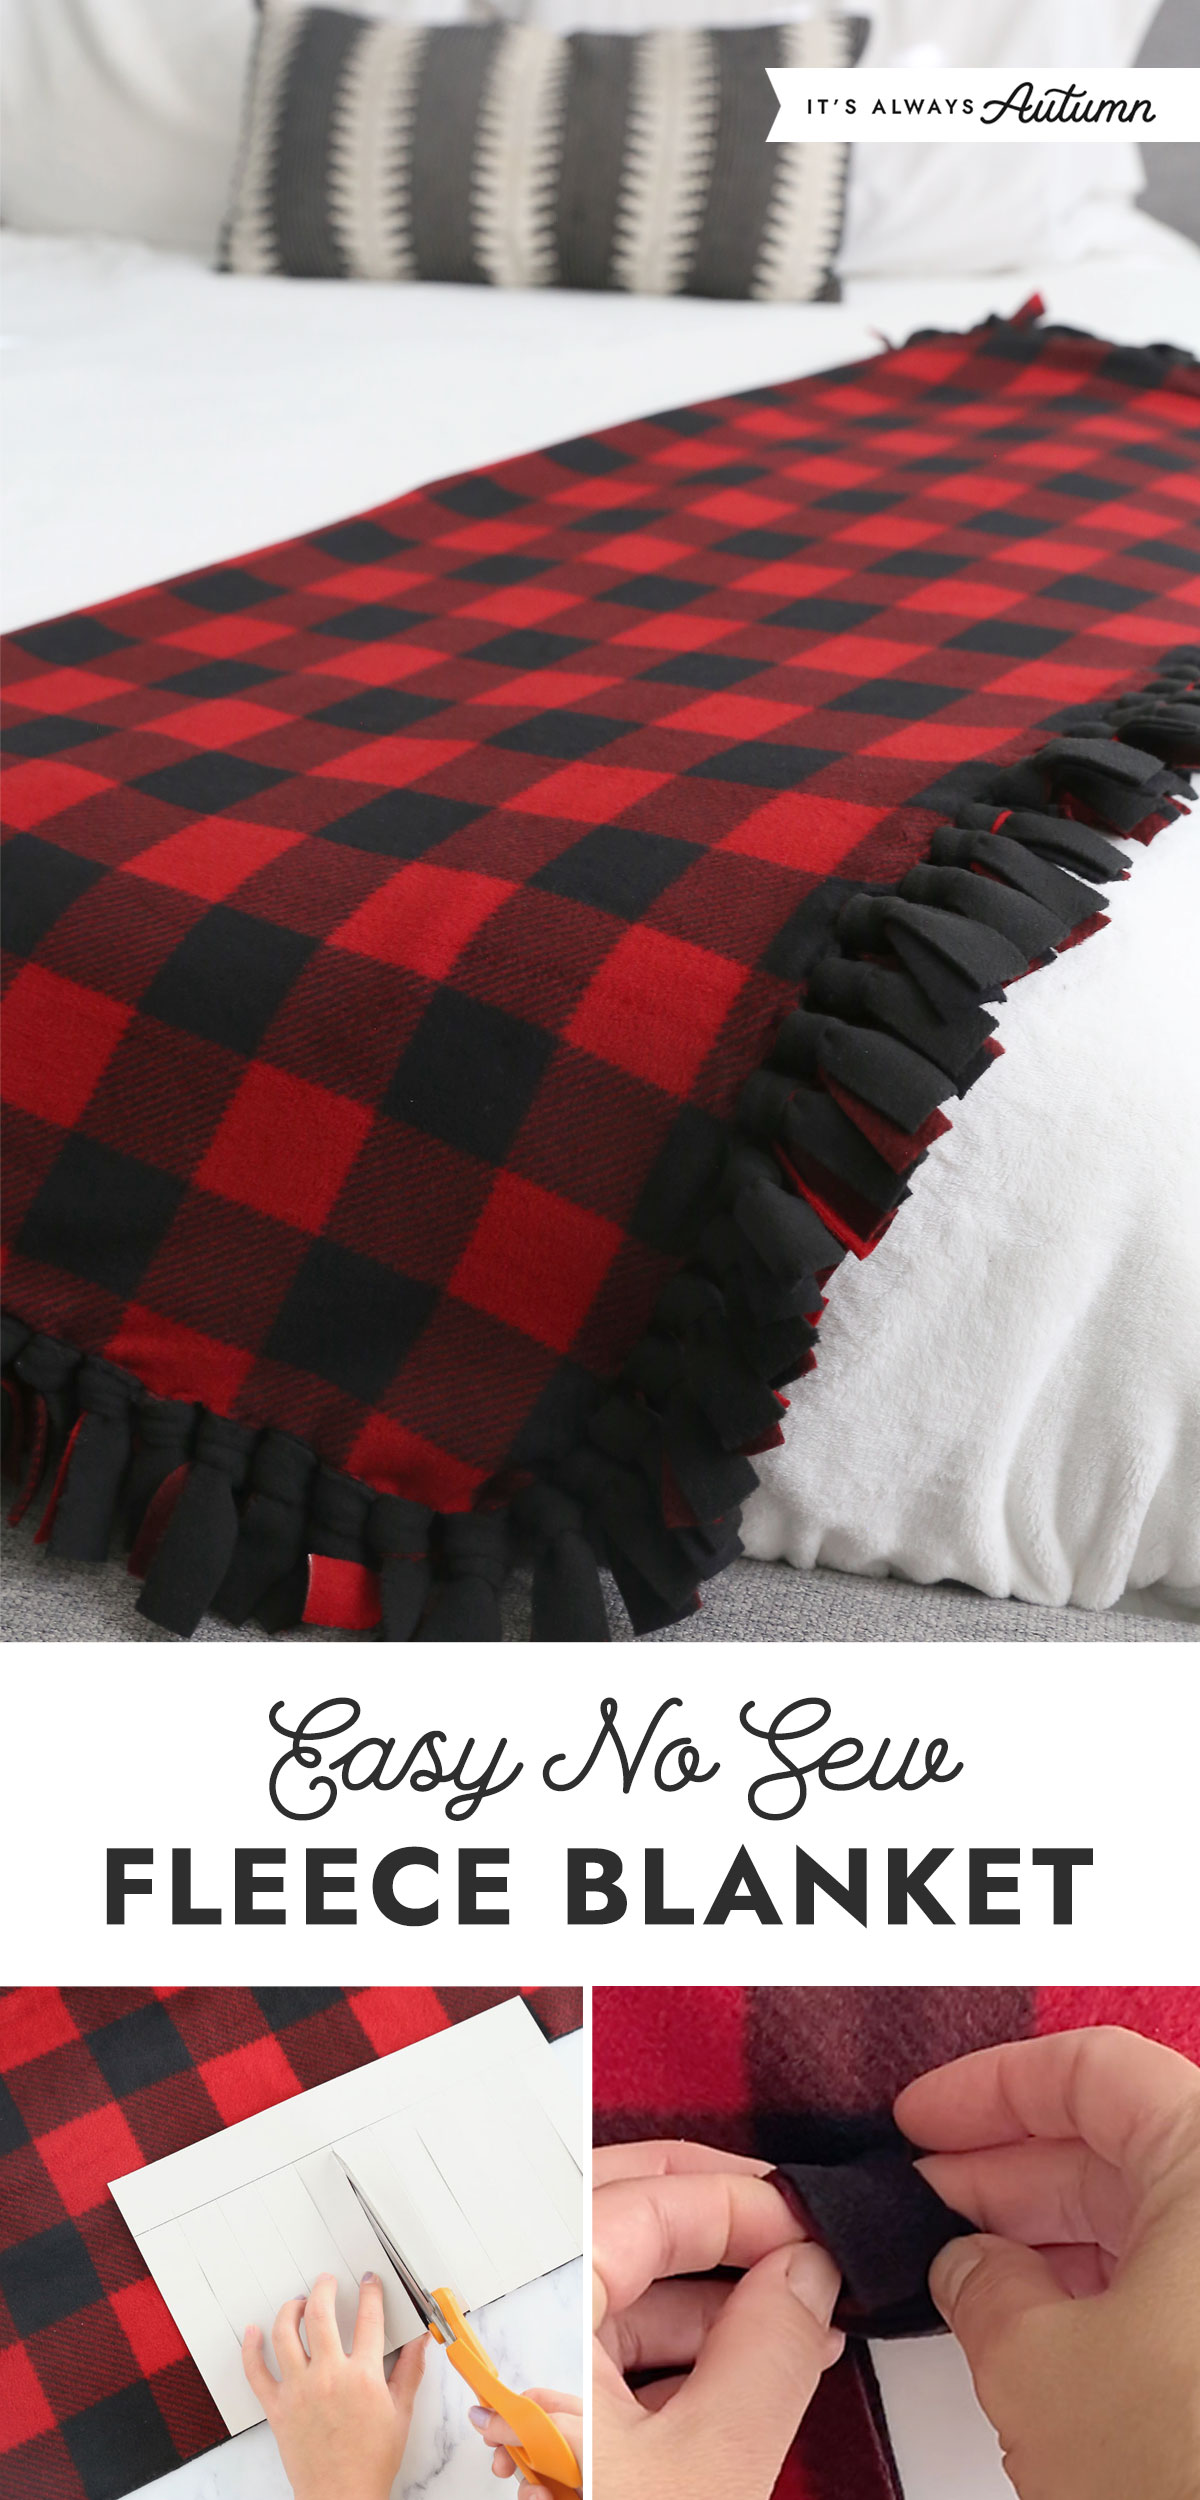 Easy no sew fleece blanket